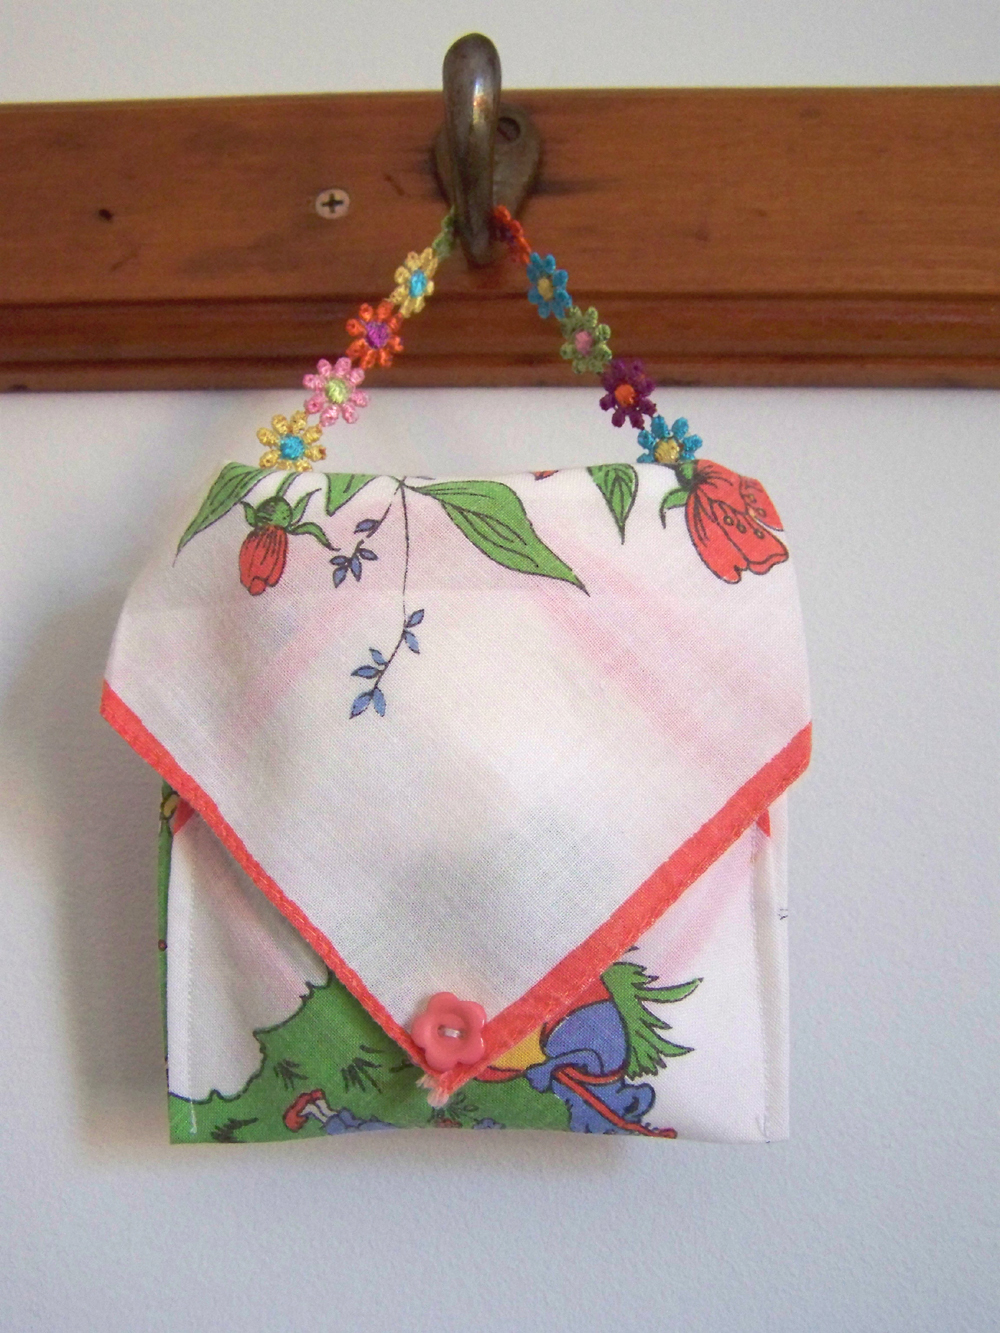 How to Make a Handkerchief - Easiest Method